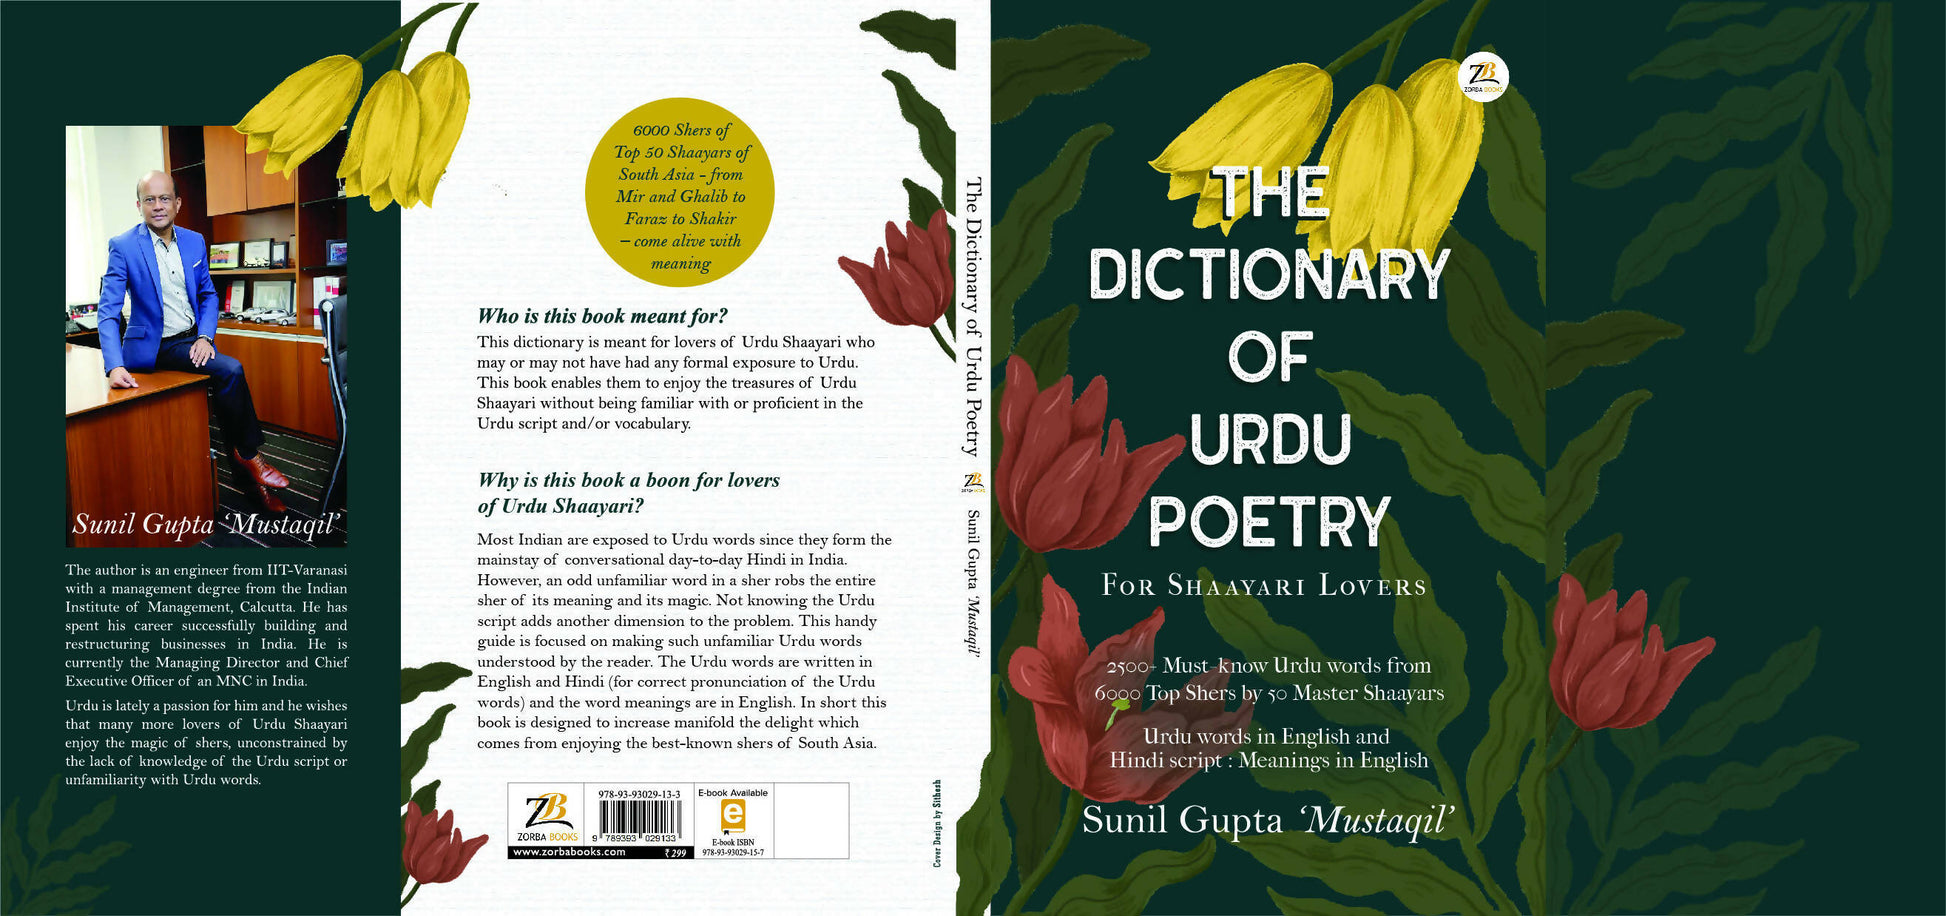 The Dictionary Of Urdu Poetry